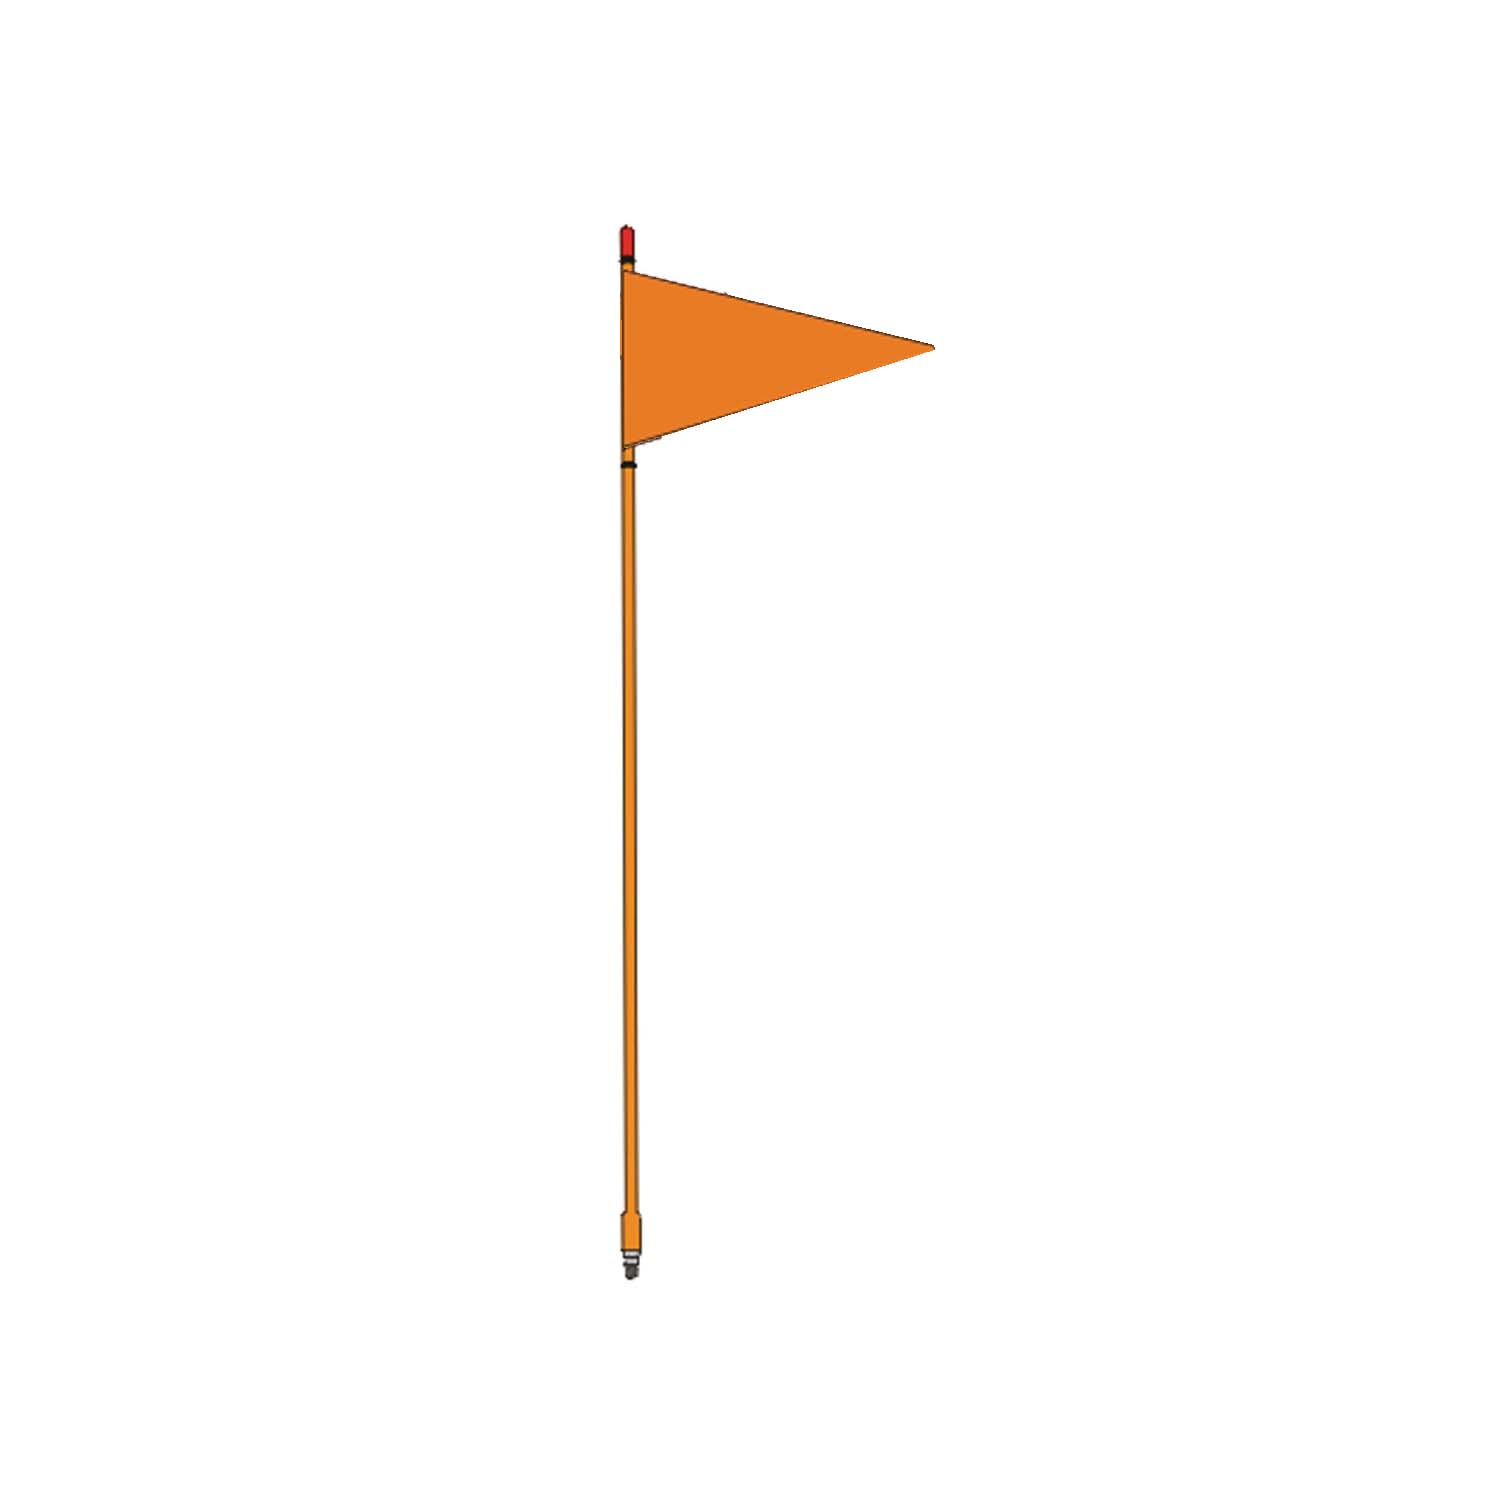 FIRESTIK - F4-G 4 FOOT ORANGE FLAGSTICK WITH ORANGE TRIANGULAR SAFETY FLAG - STANDARD 3/8"-24 BASE THREADS